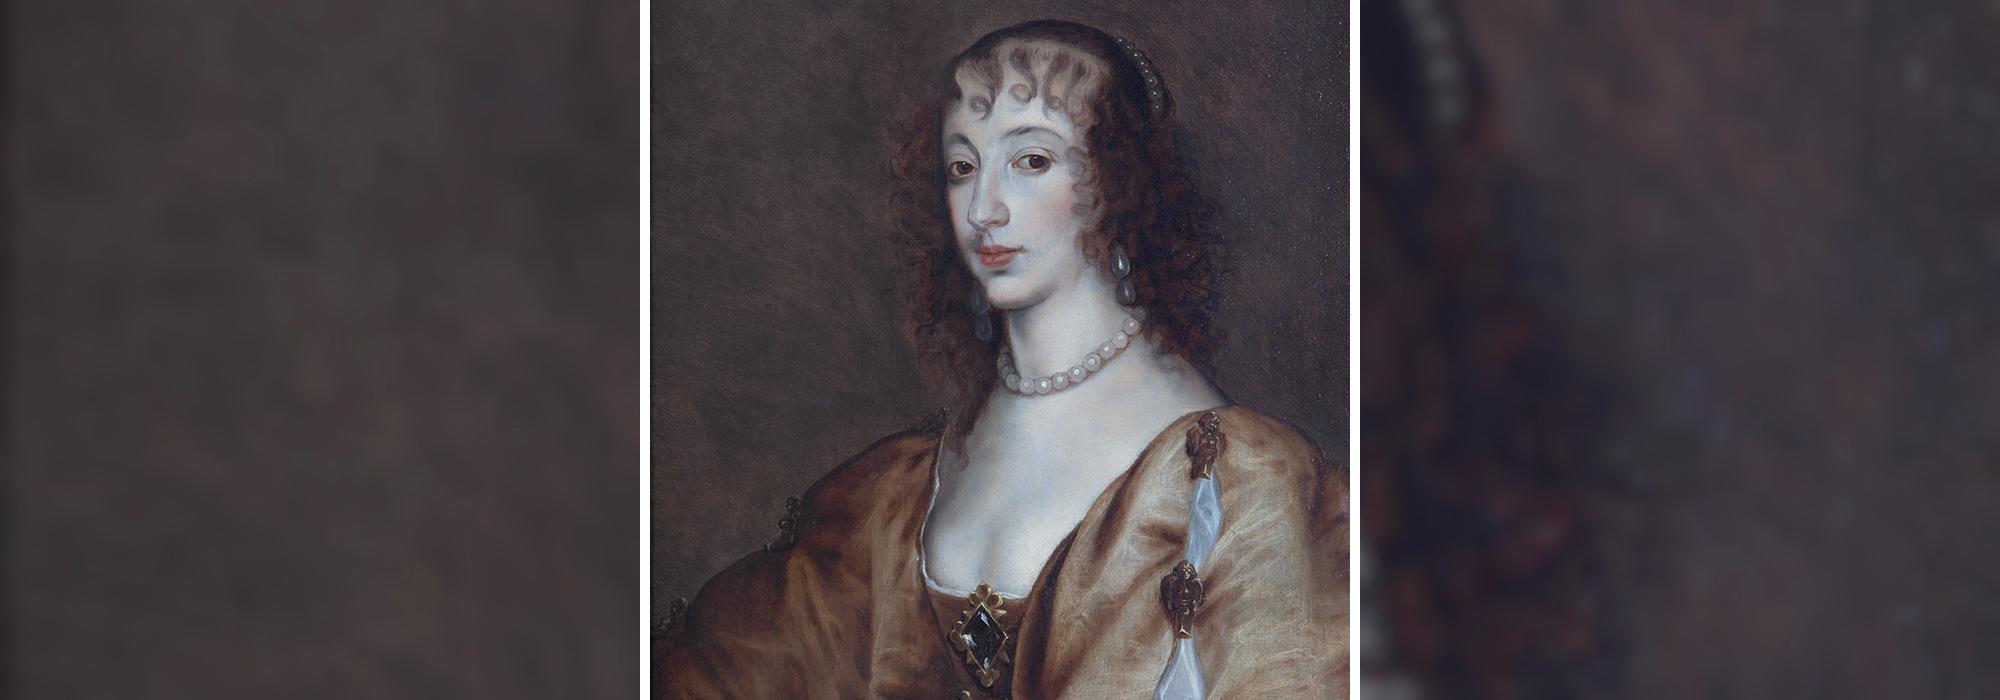 Detail from a portrait of Henrietta Maria (1609–1669), by an unknown artist